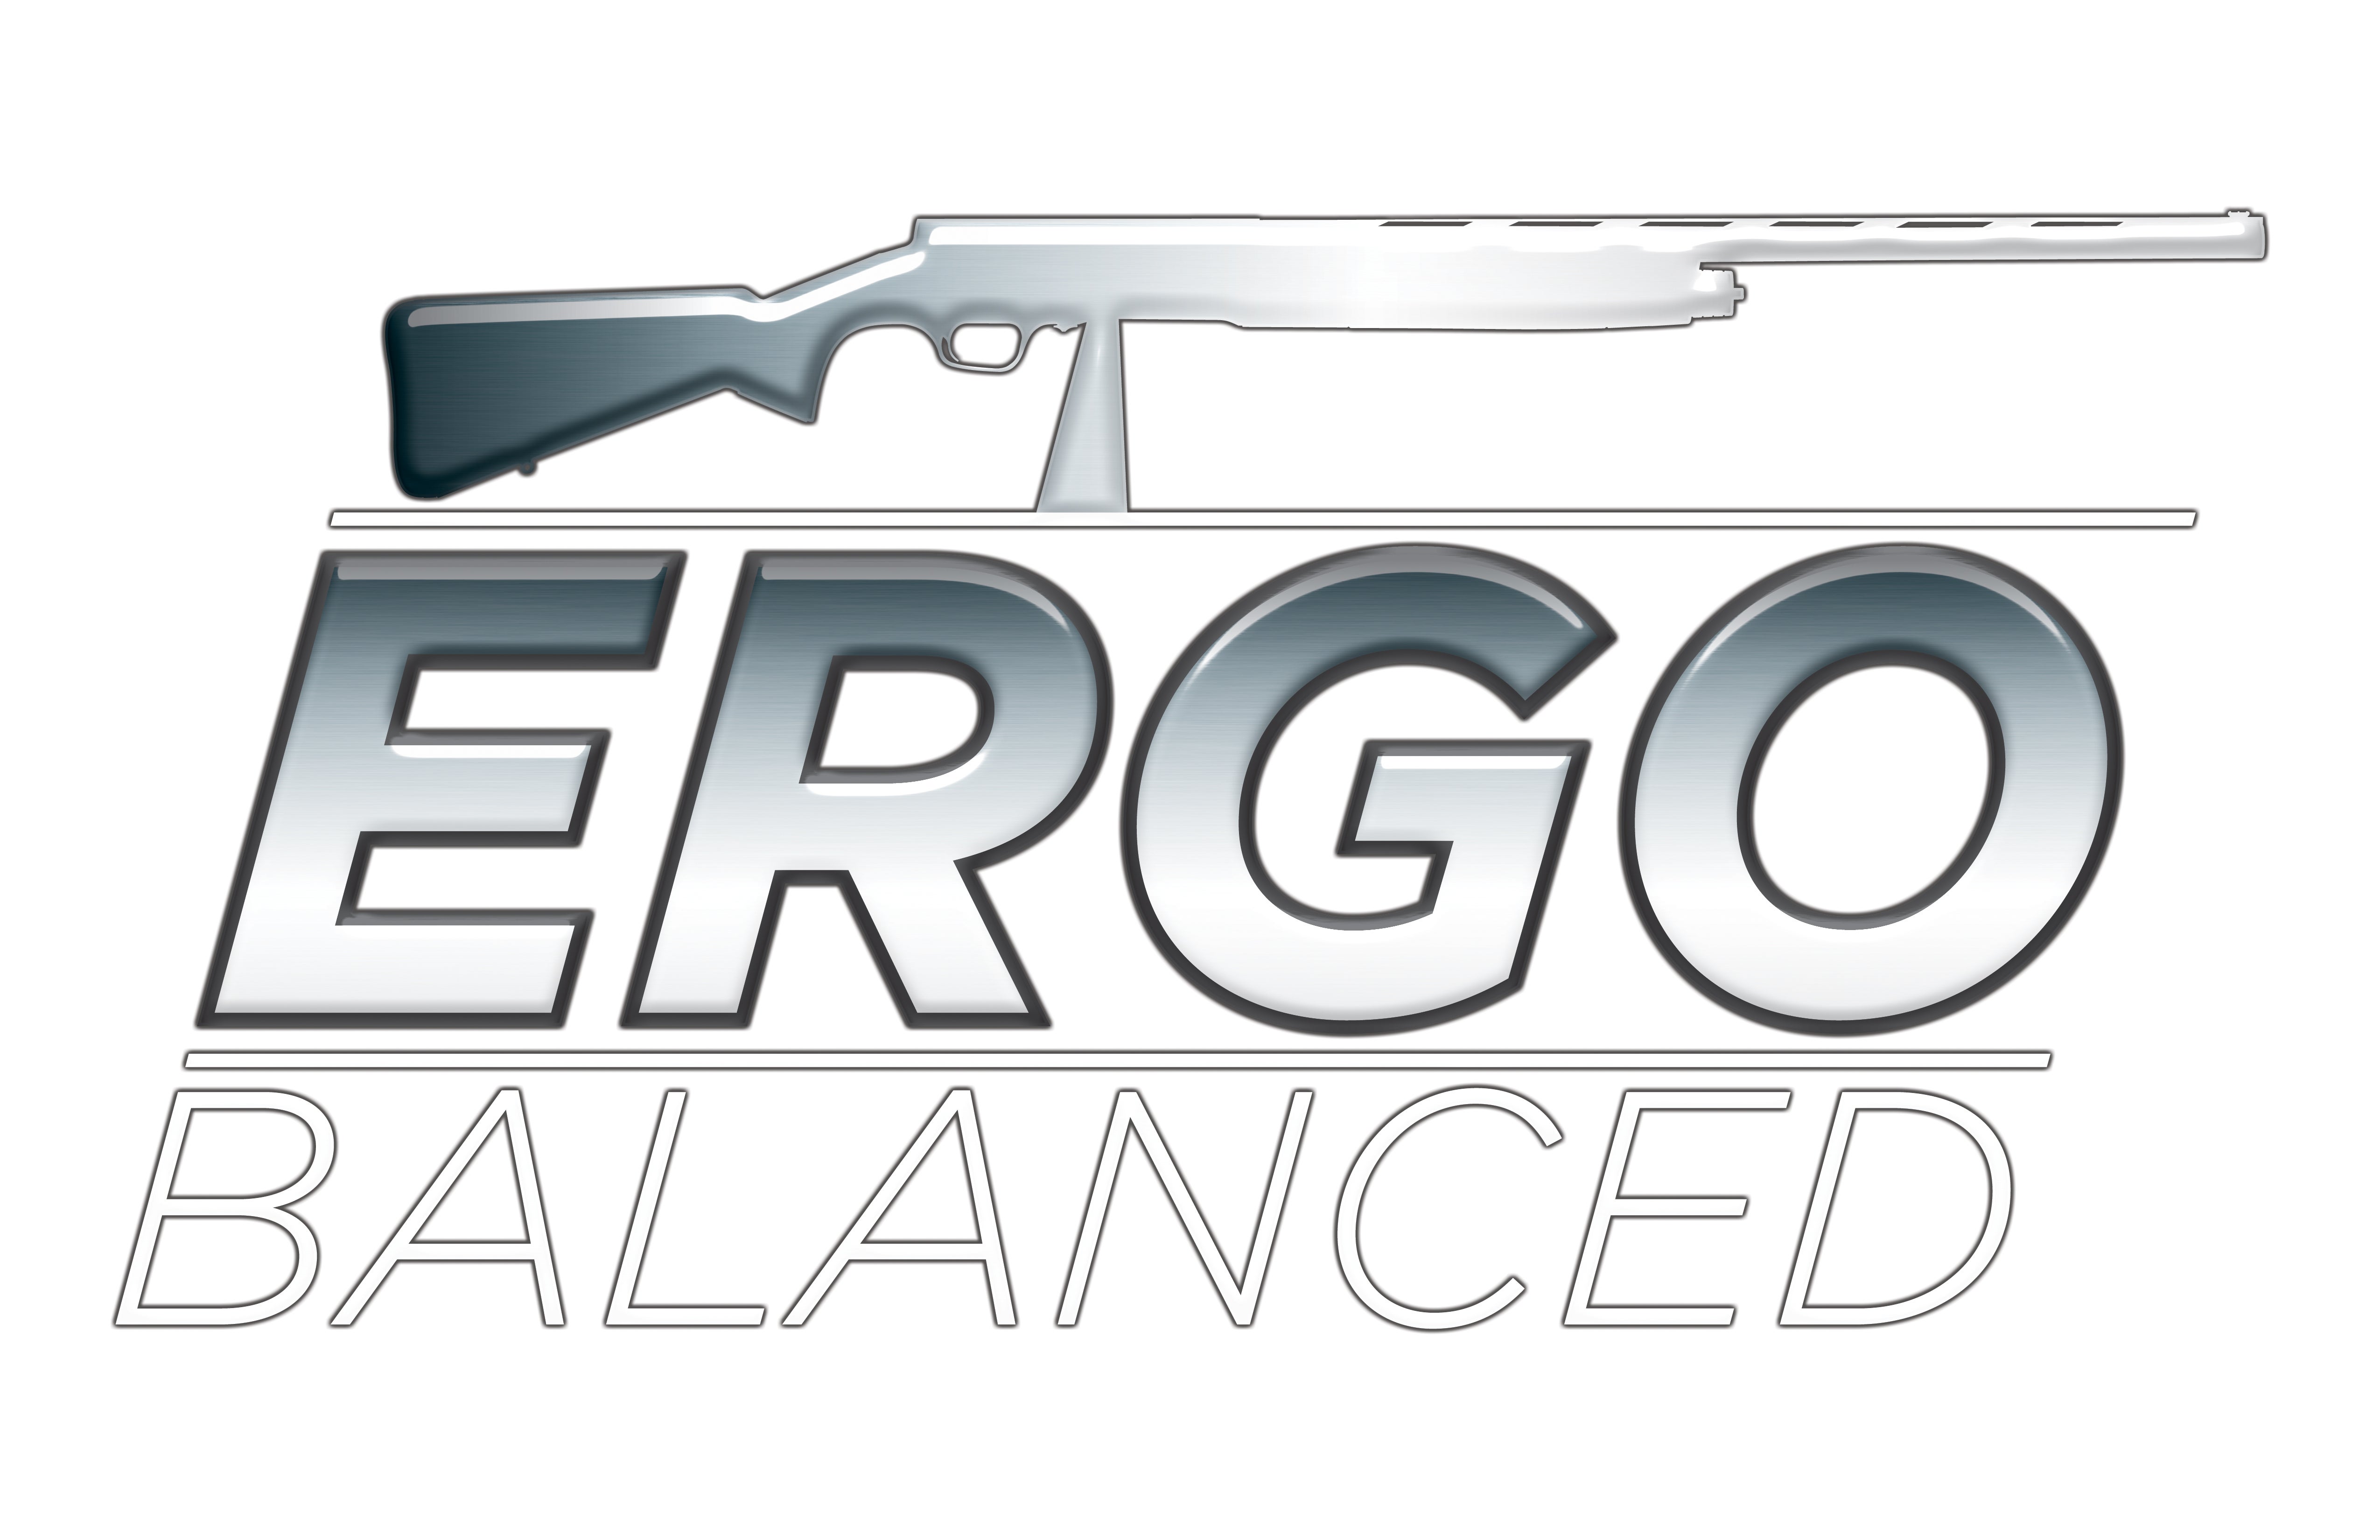 Ergo balanced A5 shotgun logo.